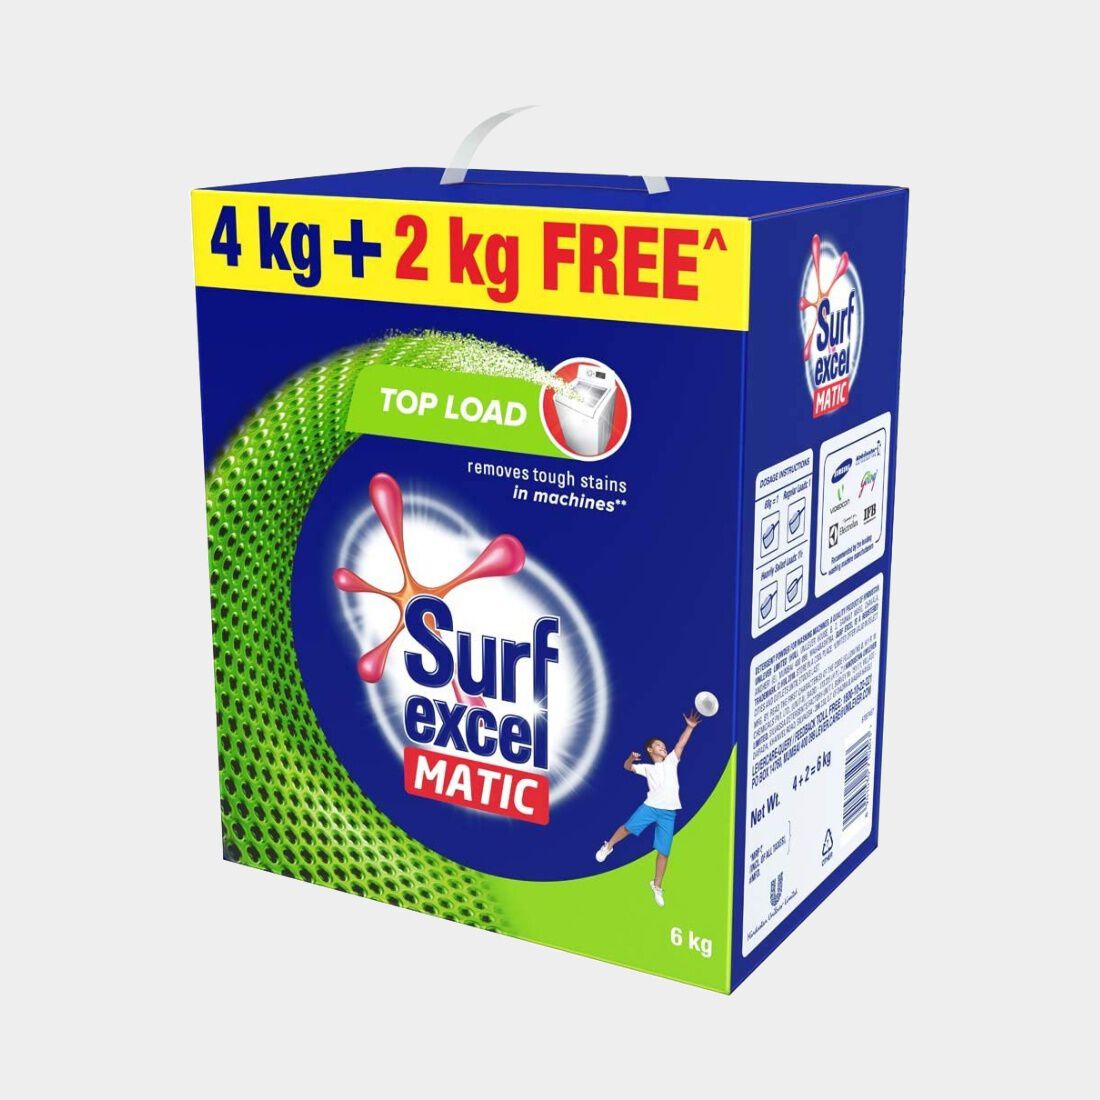 Surf Excel Matic Top Load Washing Powder 1kg – SUN ONLINE